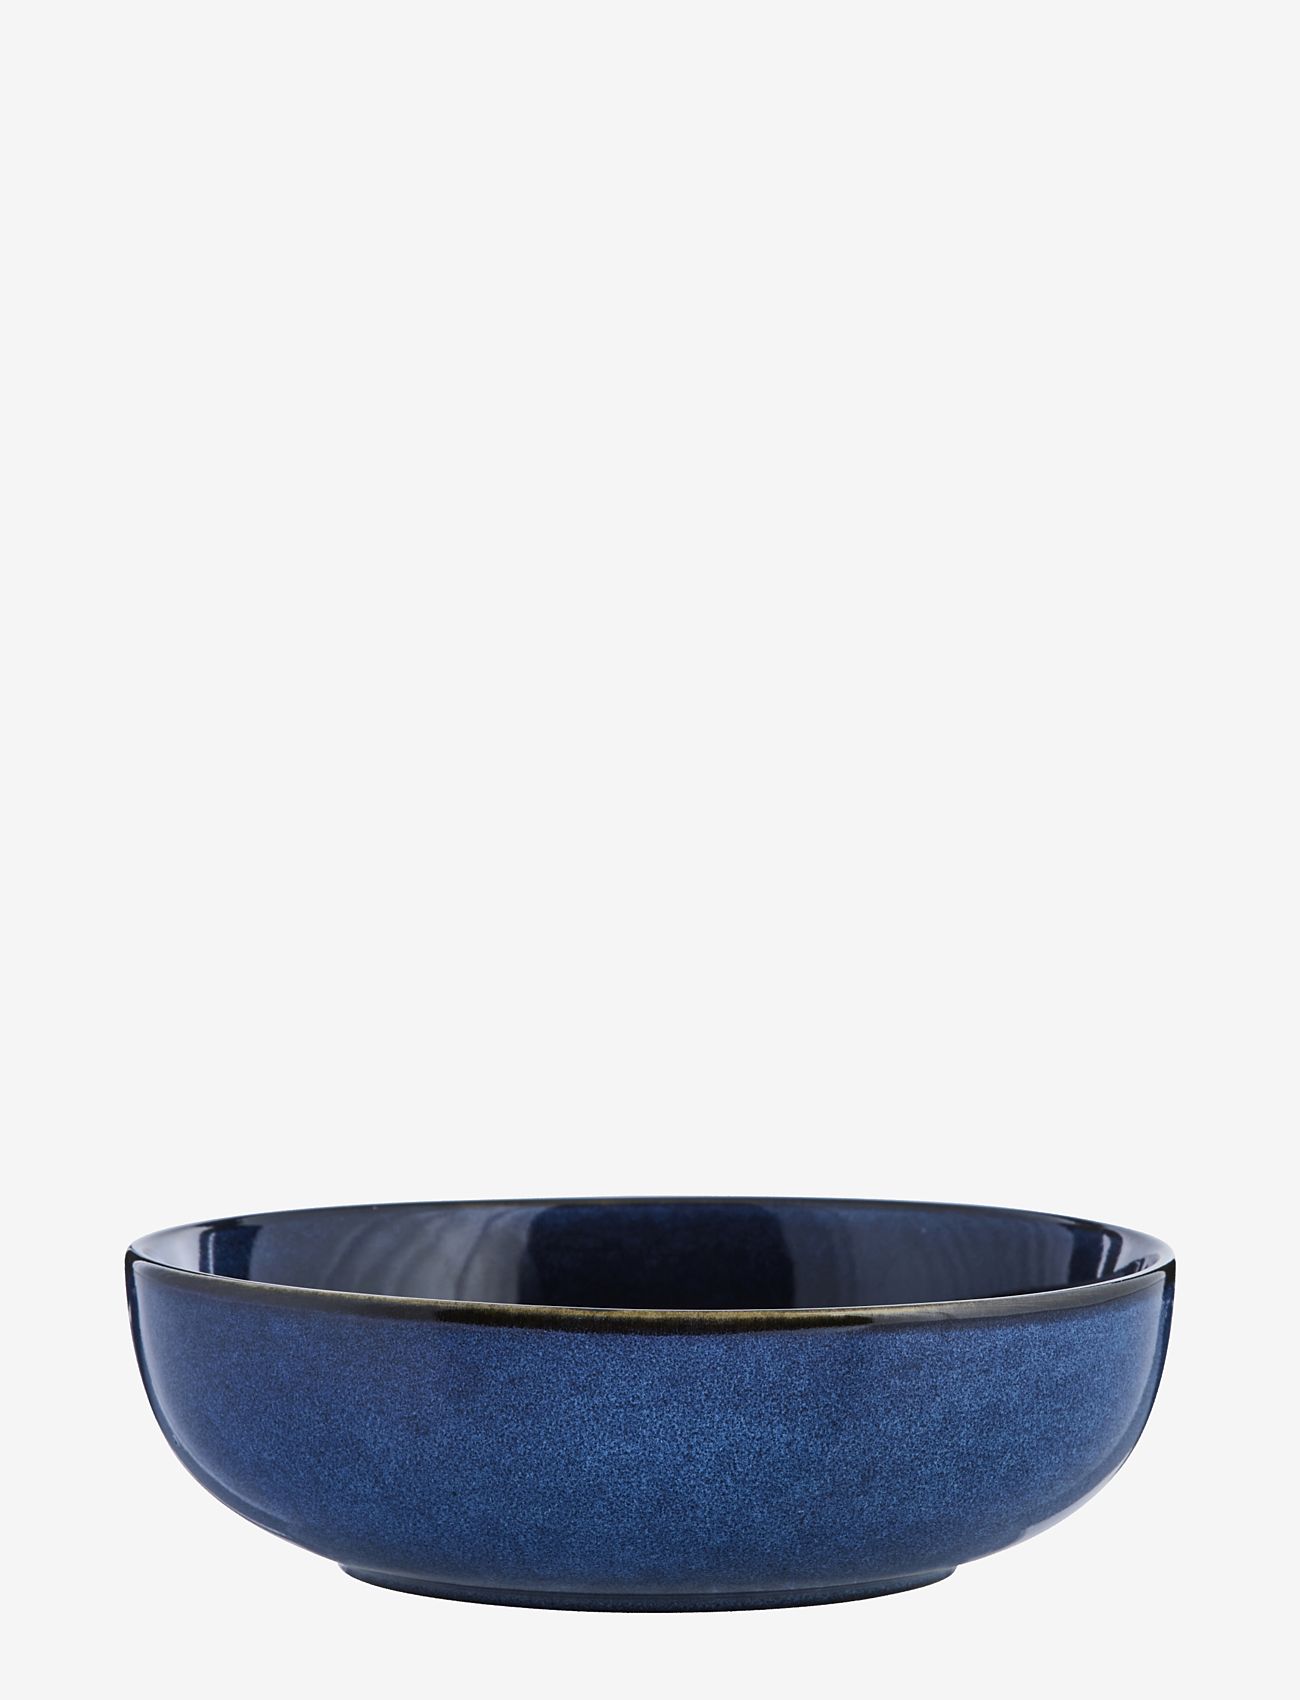 Lene Bjerre - Amera bowl - lowest prices - blue - 0